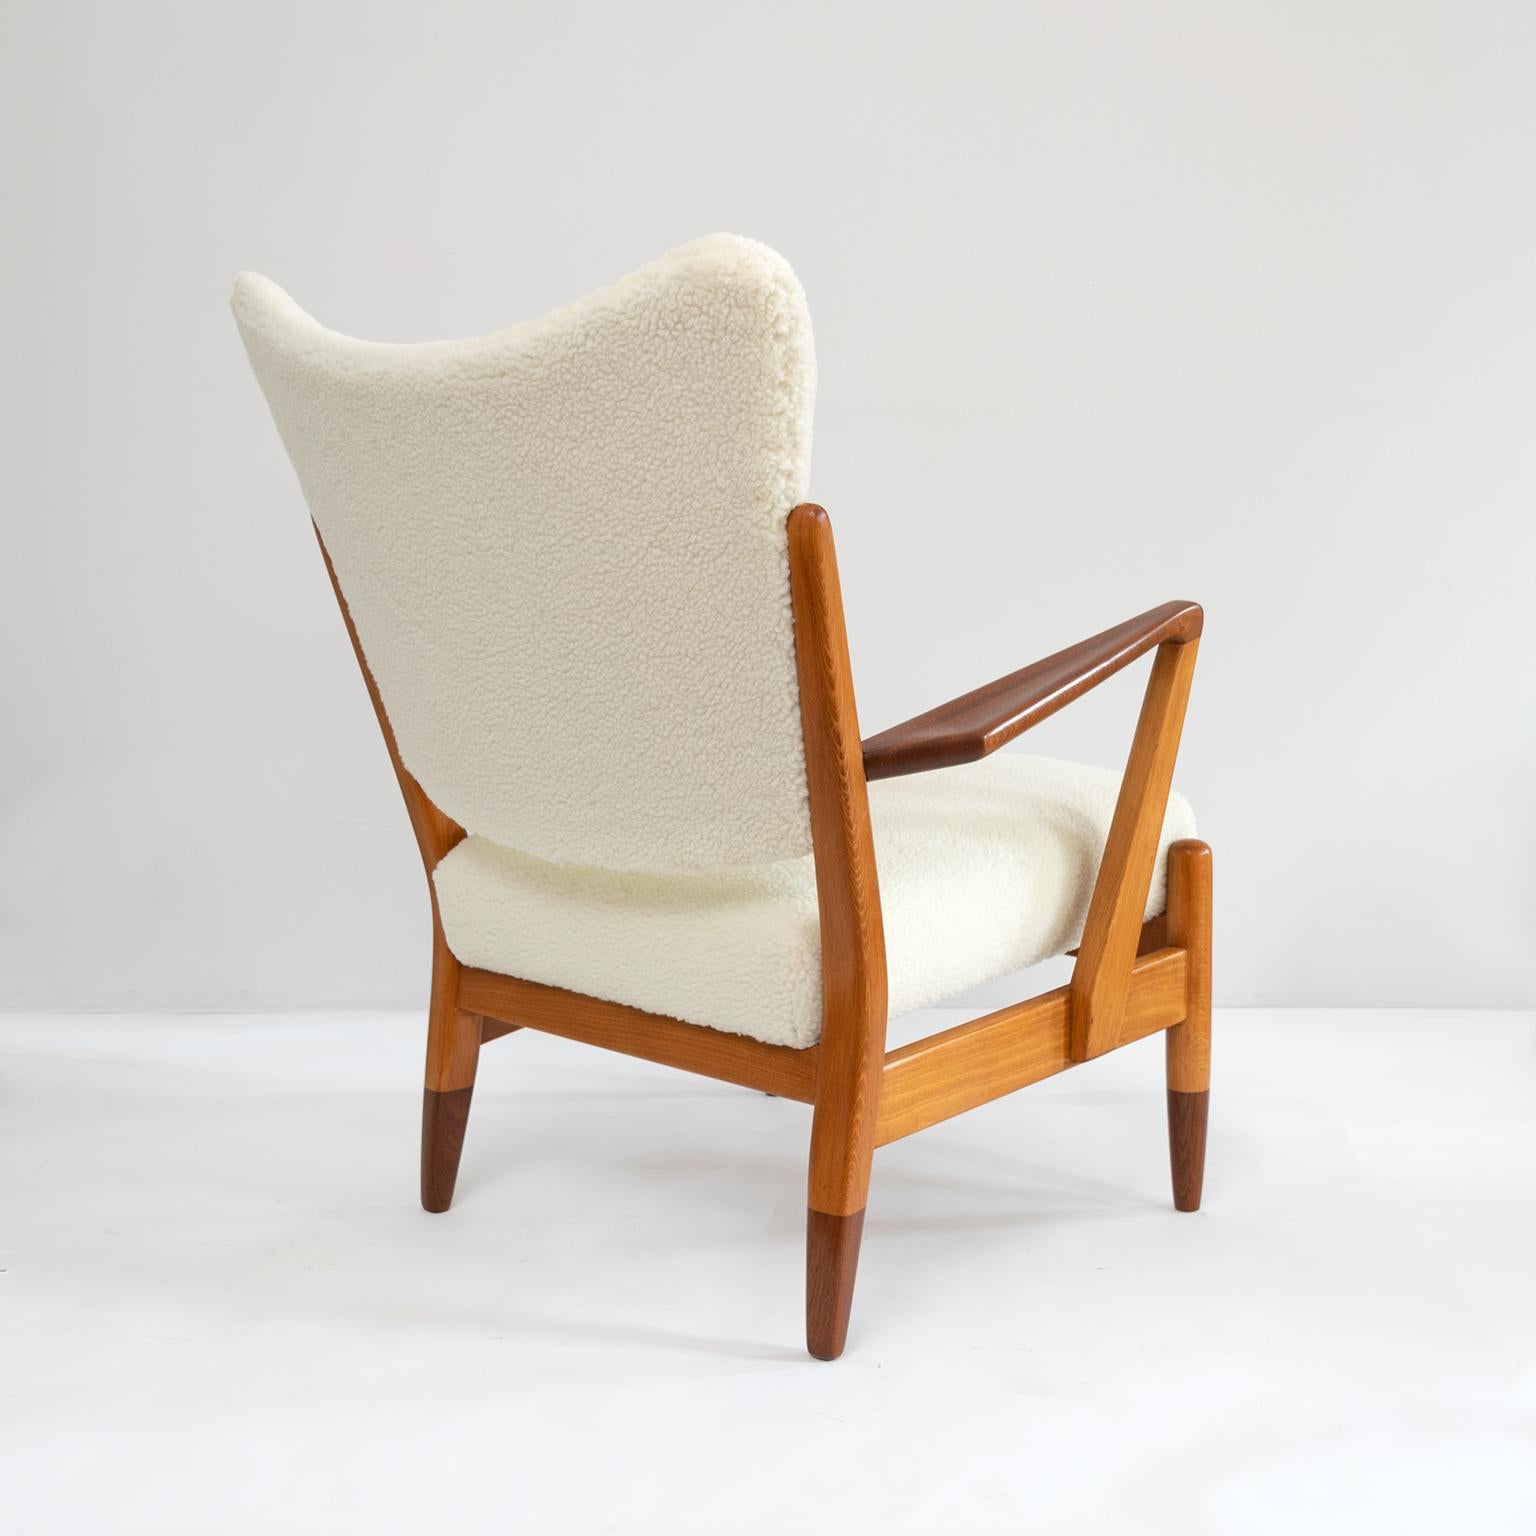 Pair of Scandinavian Modern Lounge Chairs with Faux Sheepskin, Teak Details 1